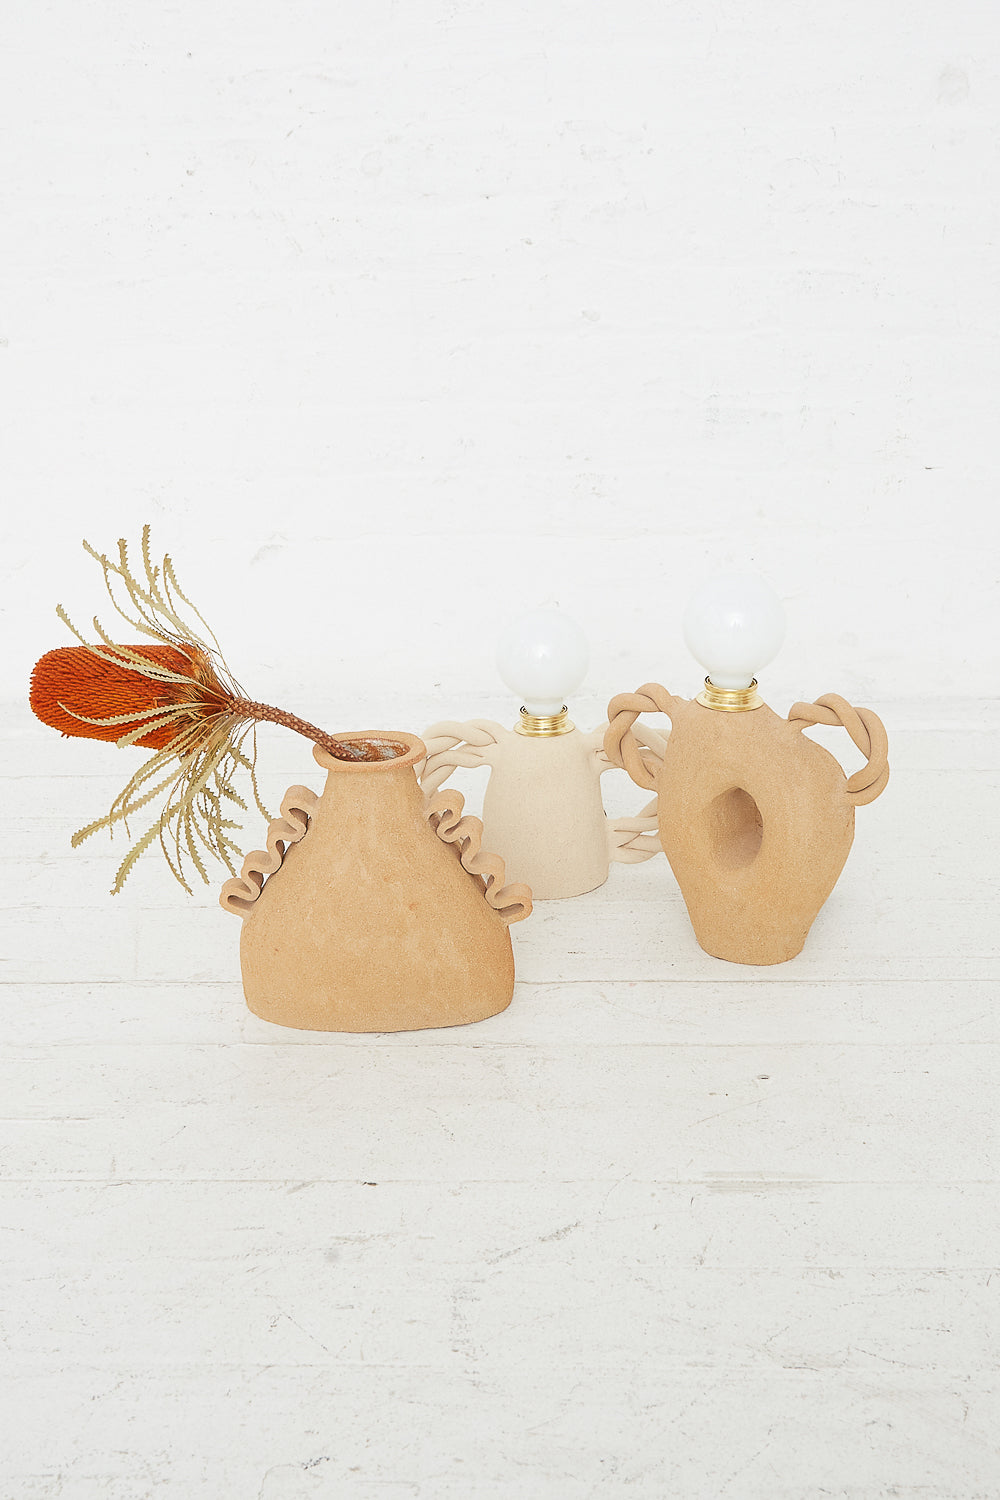 Clandestine Ceramique Objects group view